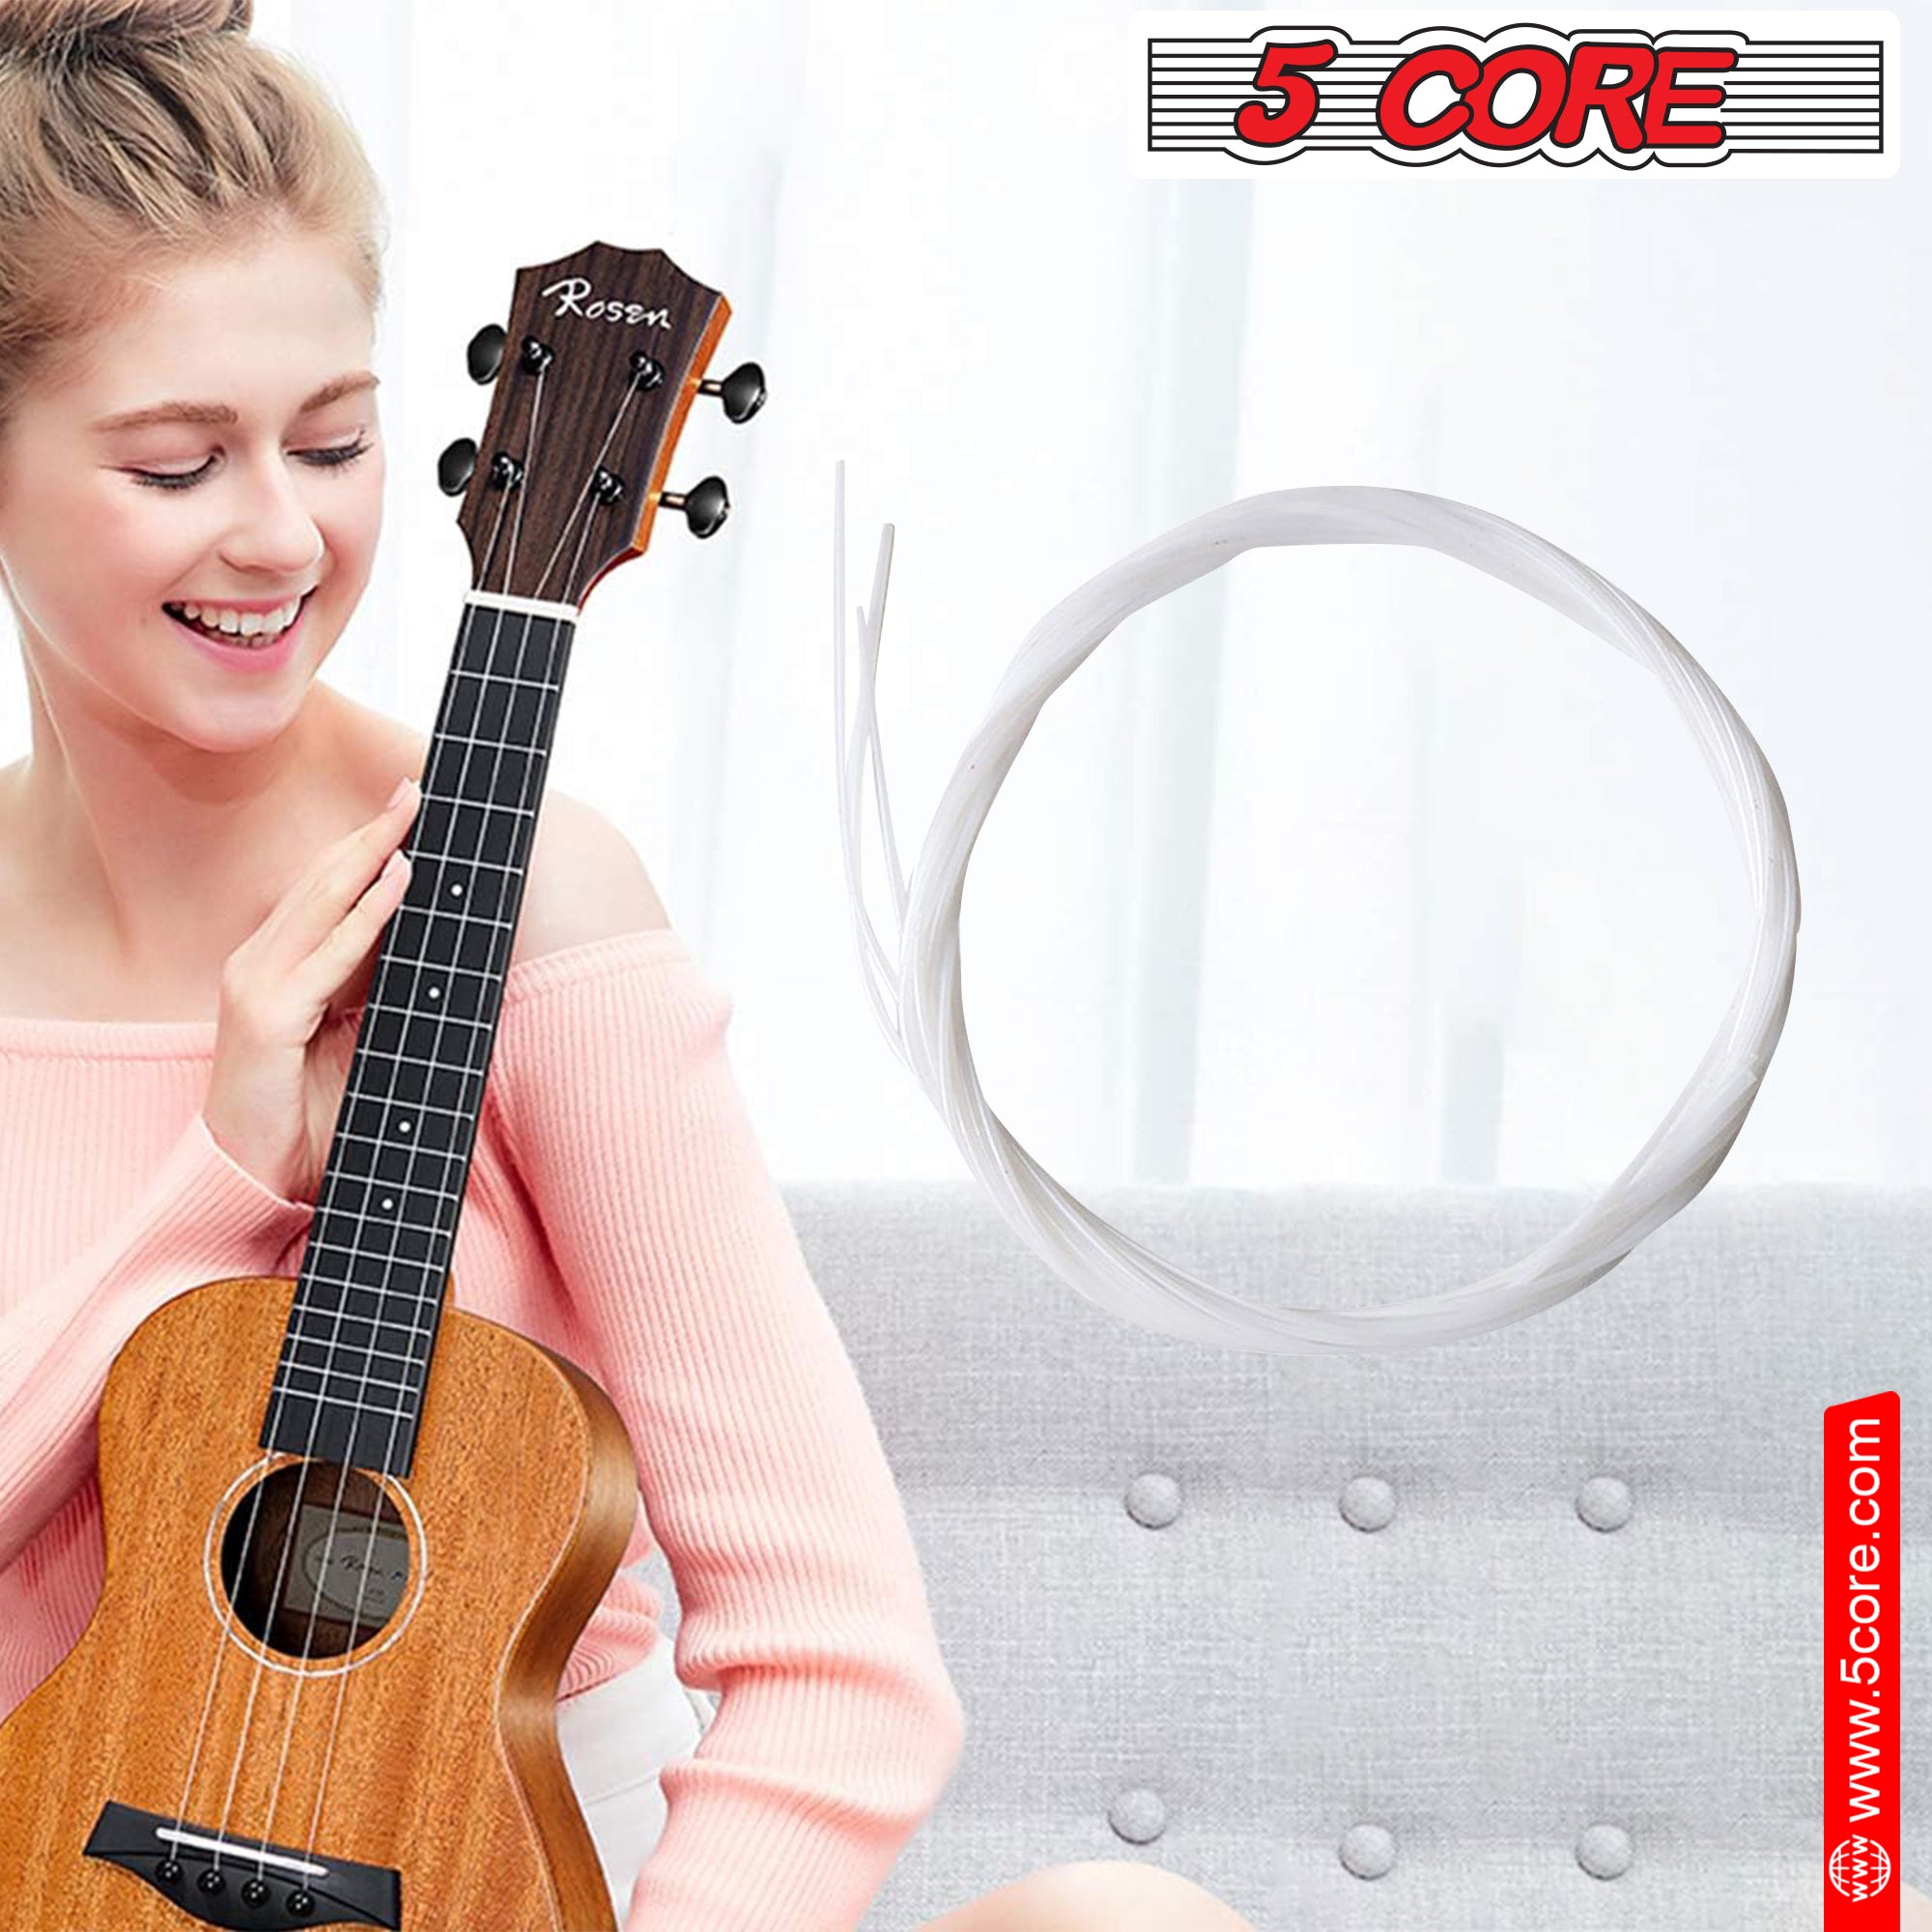 5 Core Ukulele Strings Set Premium Clear String 1 Pack For Musical Instruments - UKS 1SET (4PCS)